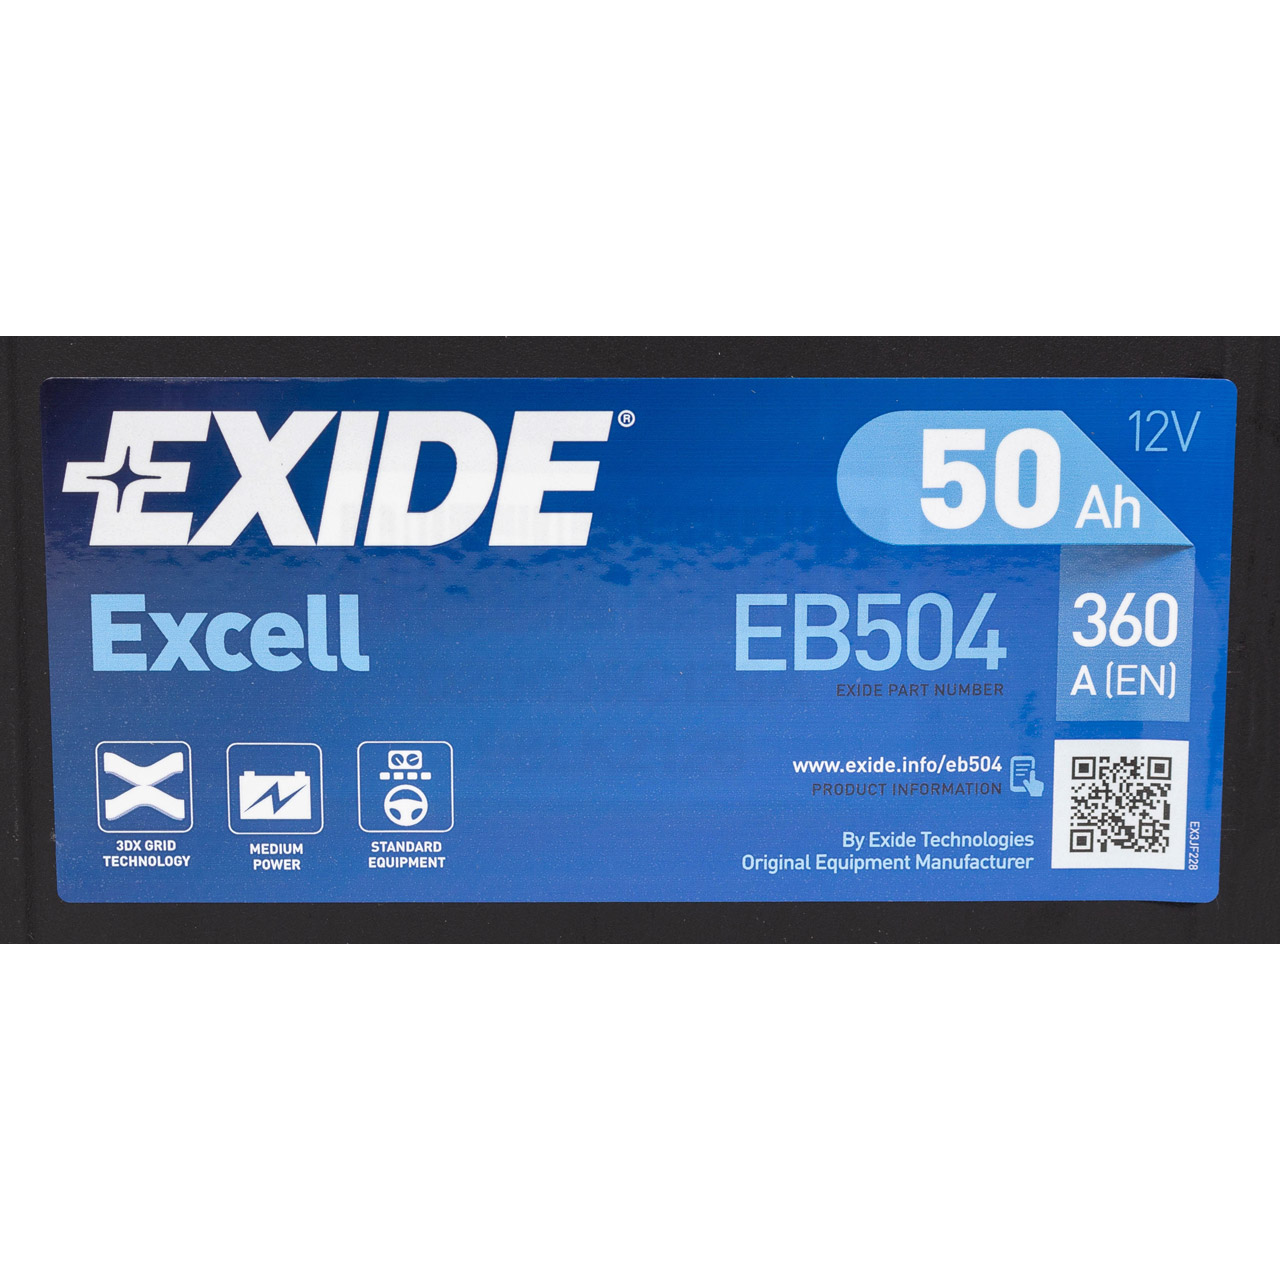 EXIDE EB504 EXCELL Autobatterie Batterie Starterbatterie 12V 50Ah